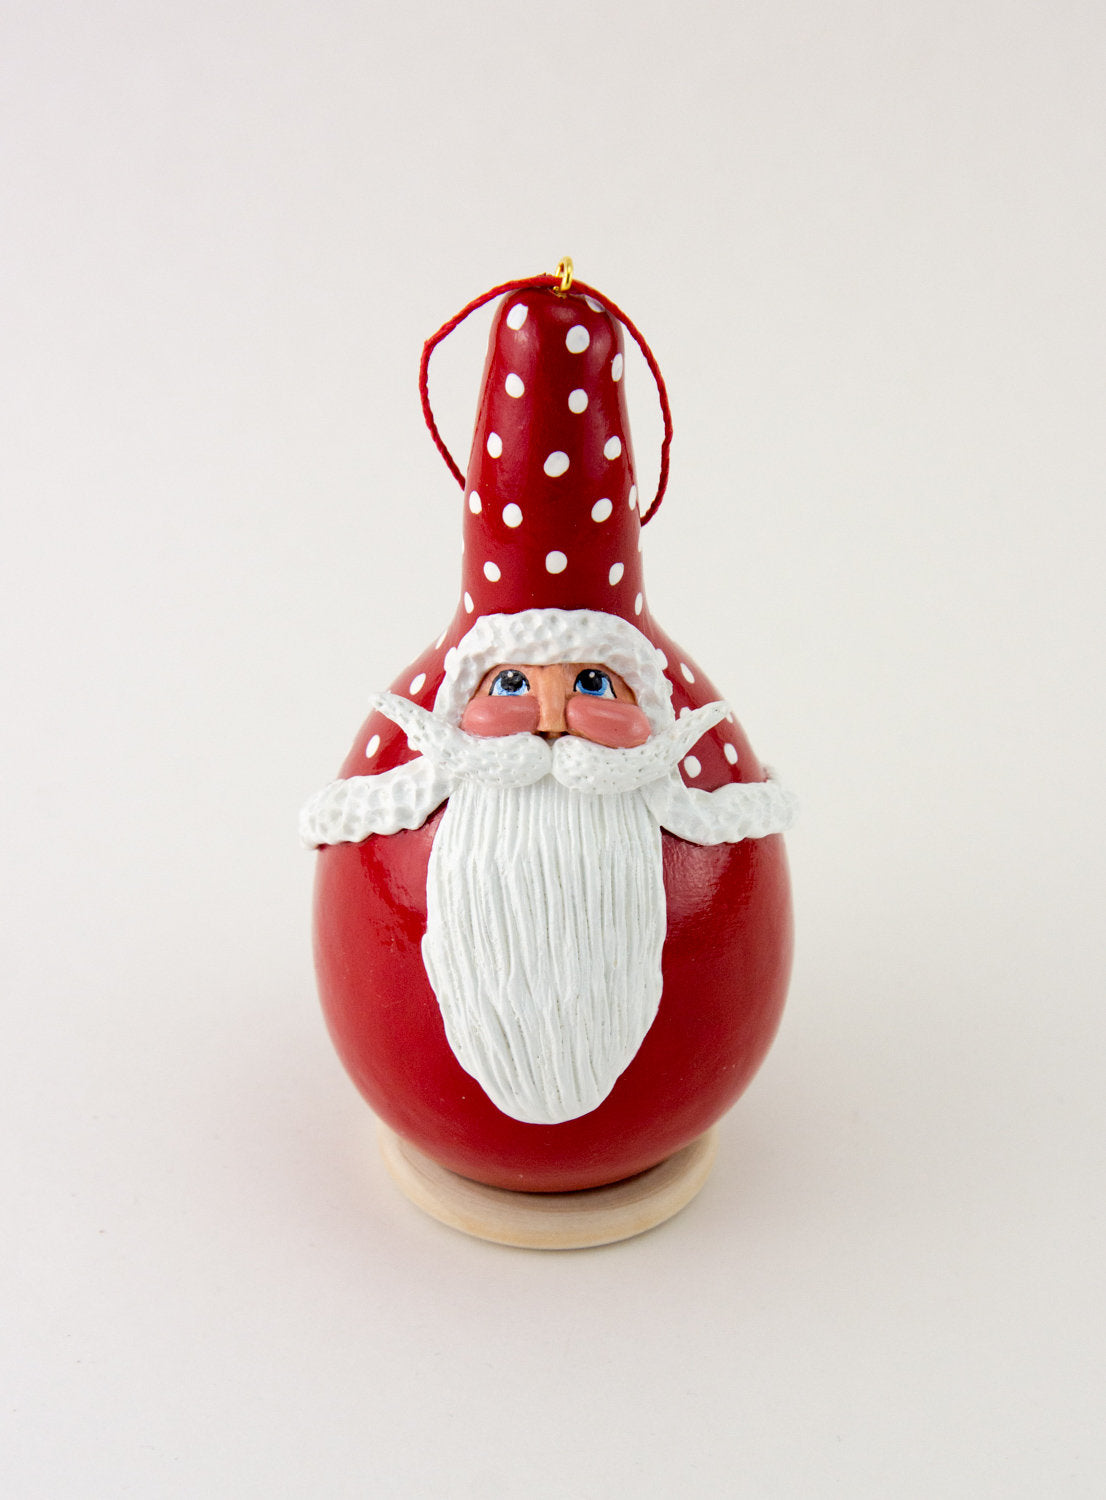 Santa Ornament,  Gourd Art, Christmas Tree Decoration, Father Christmas Ornament,  Old World Santa,  Santa Claus,  Holiday Ornament - Gourdaments